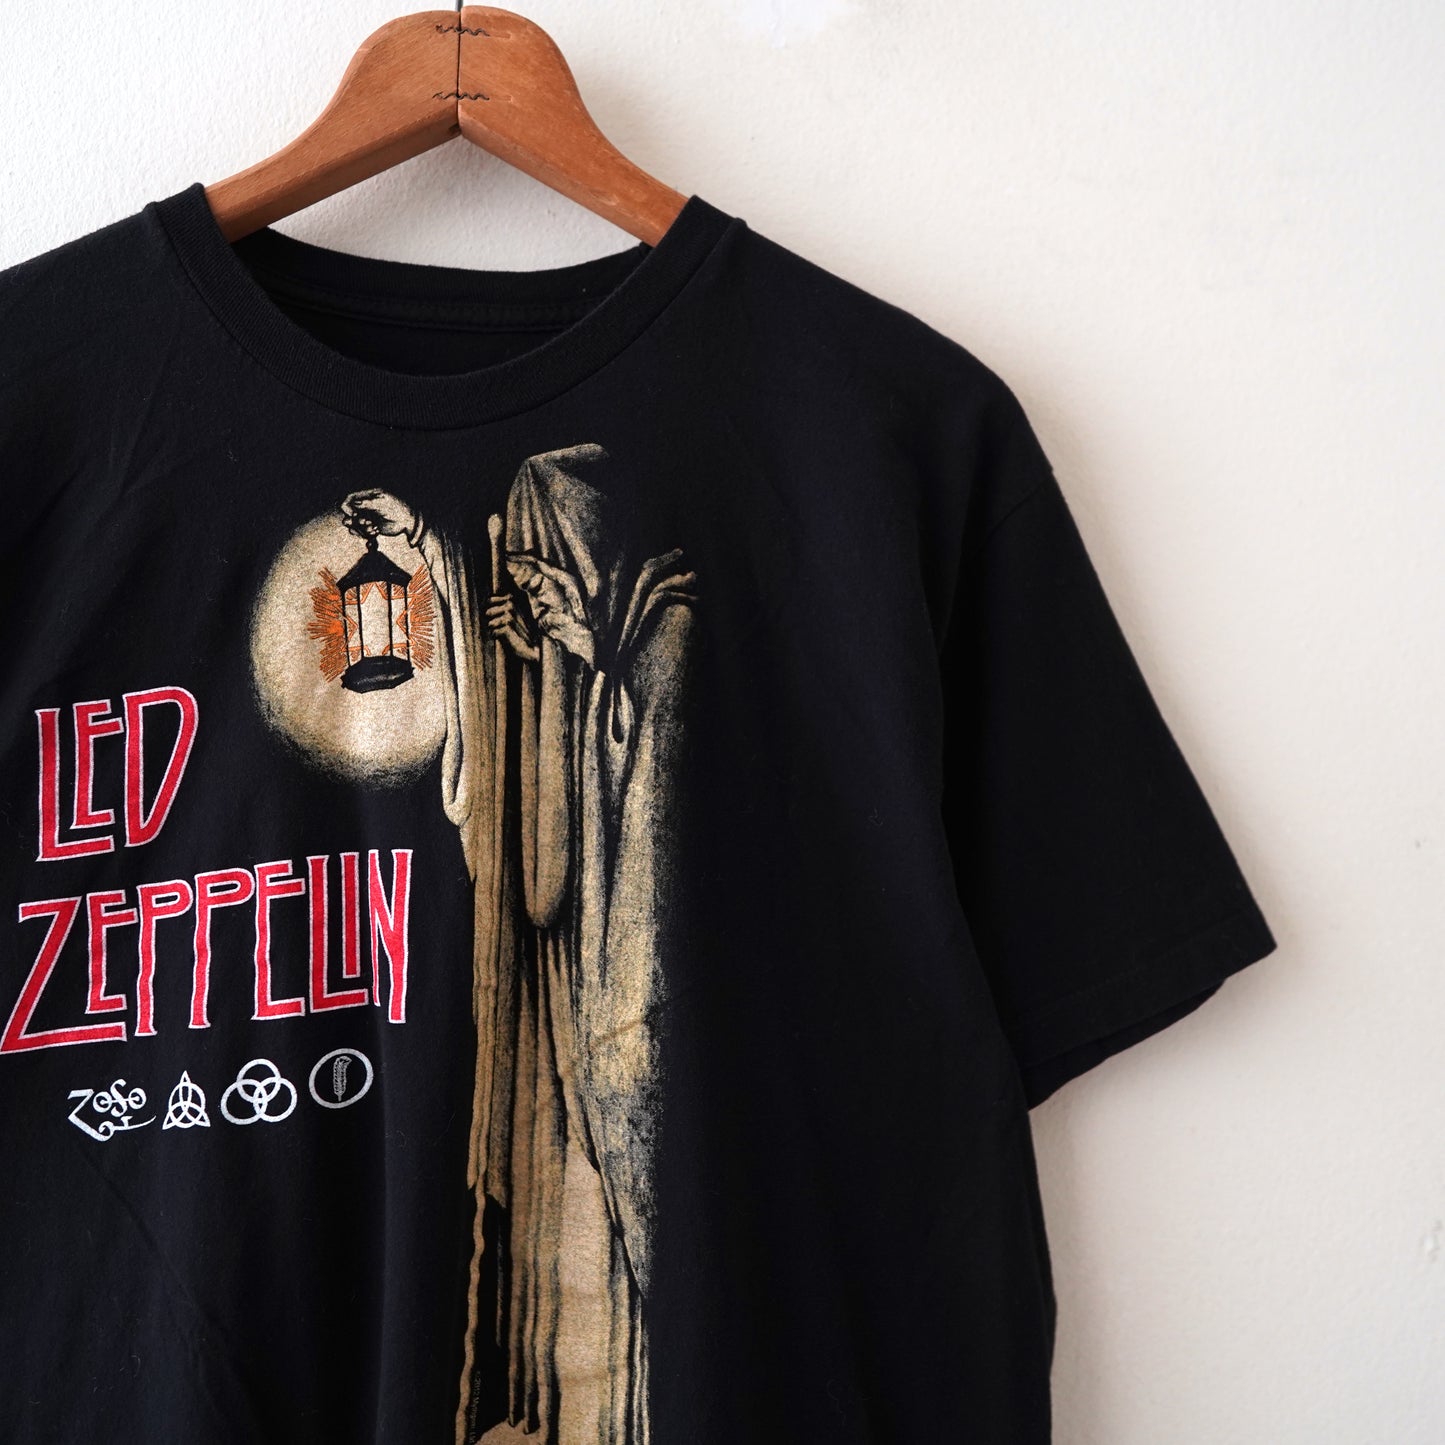 Led Zeppelin tee